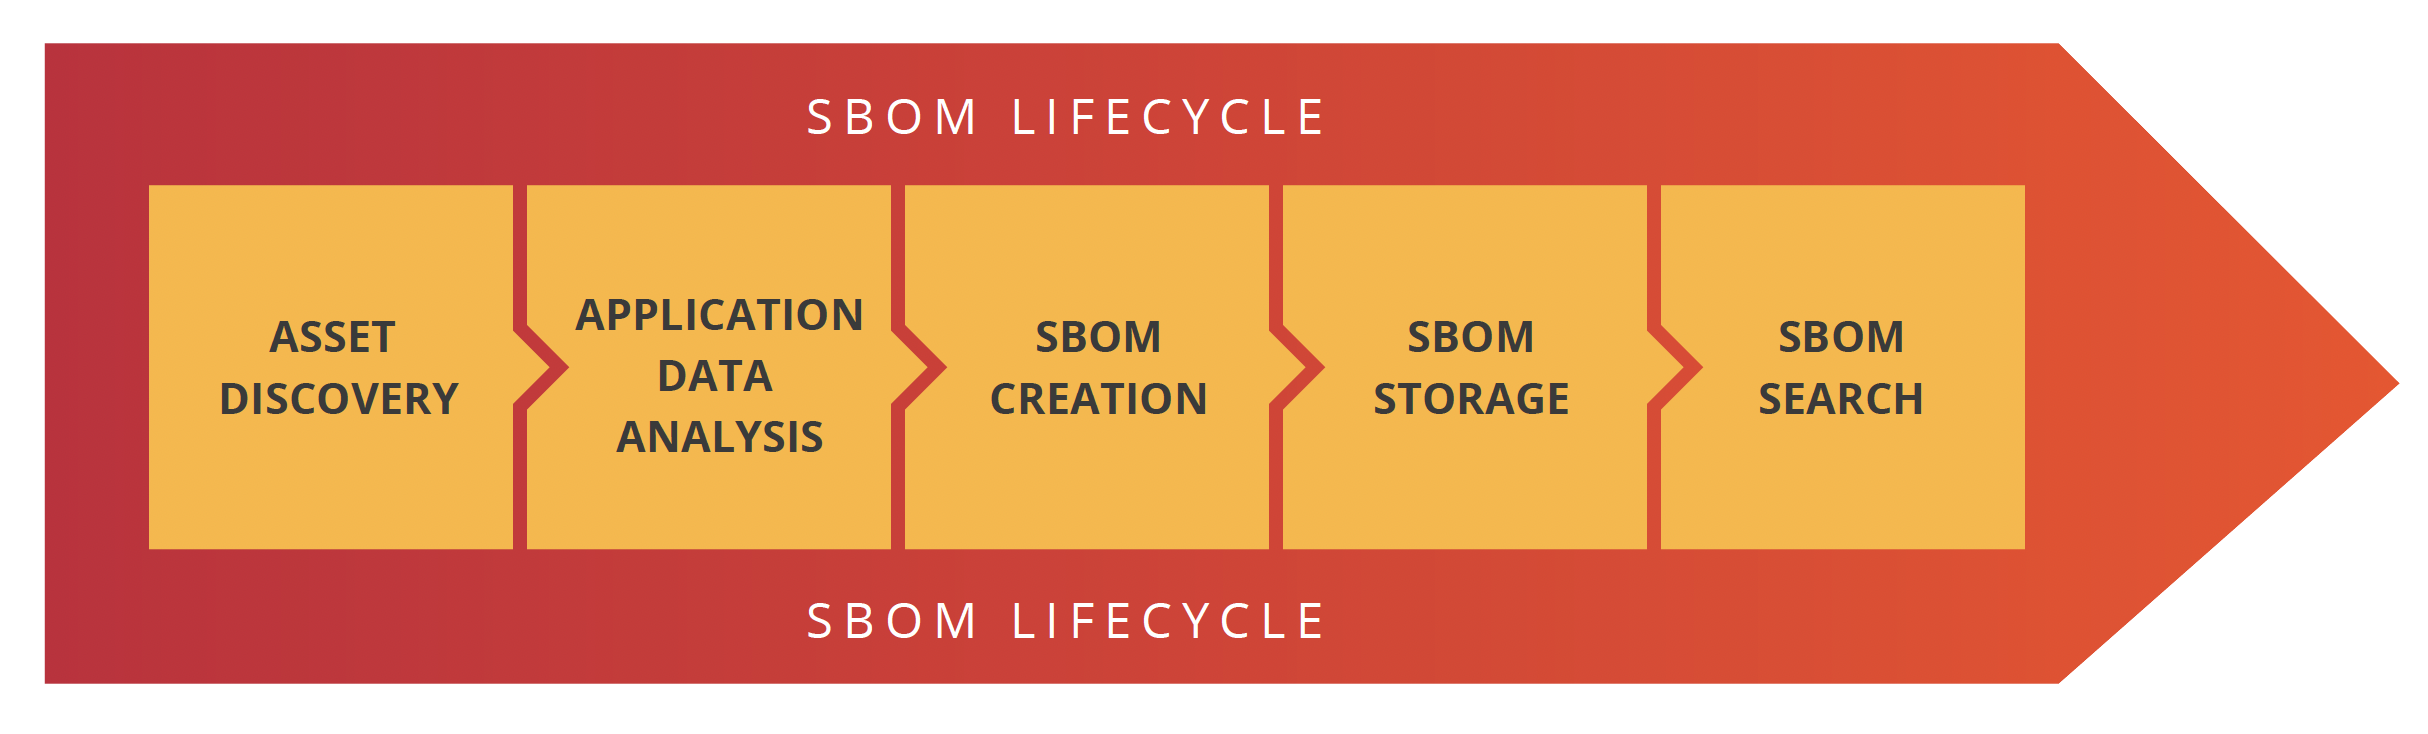 sbom-lifecycle-arrow